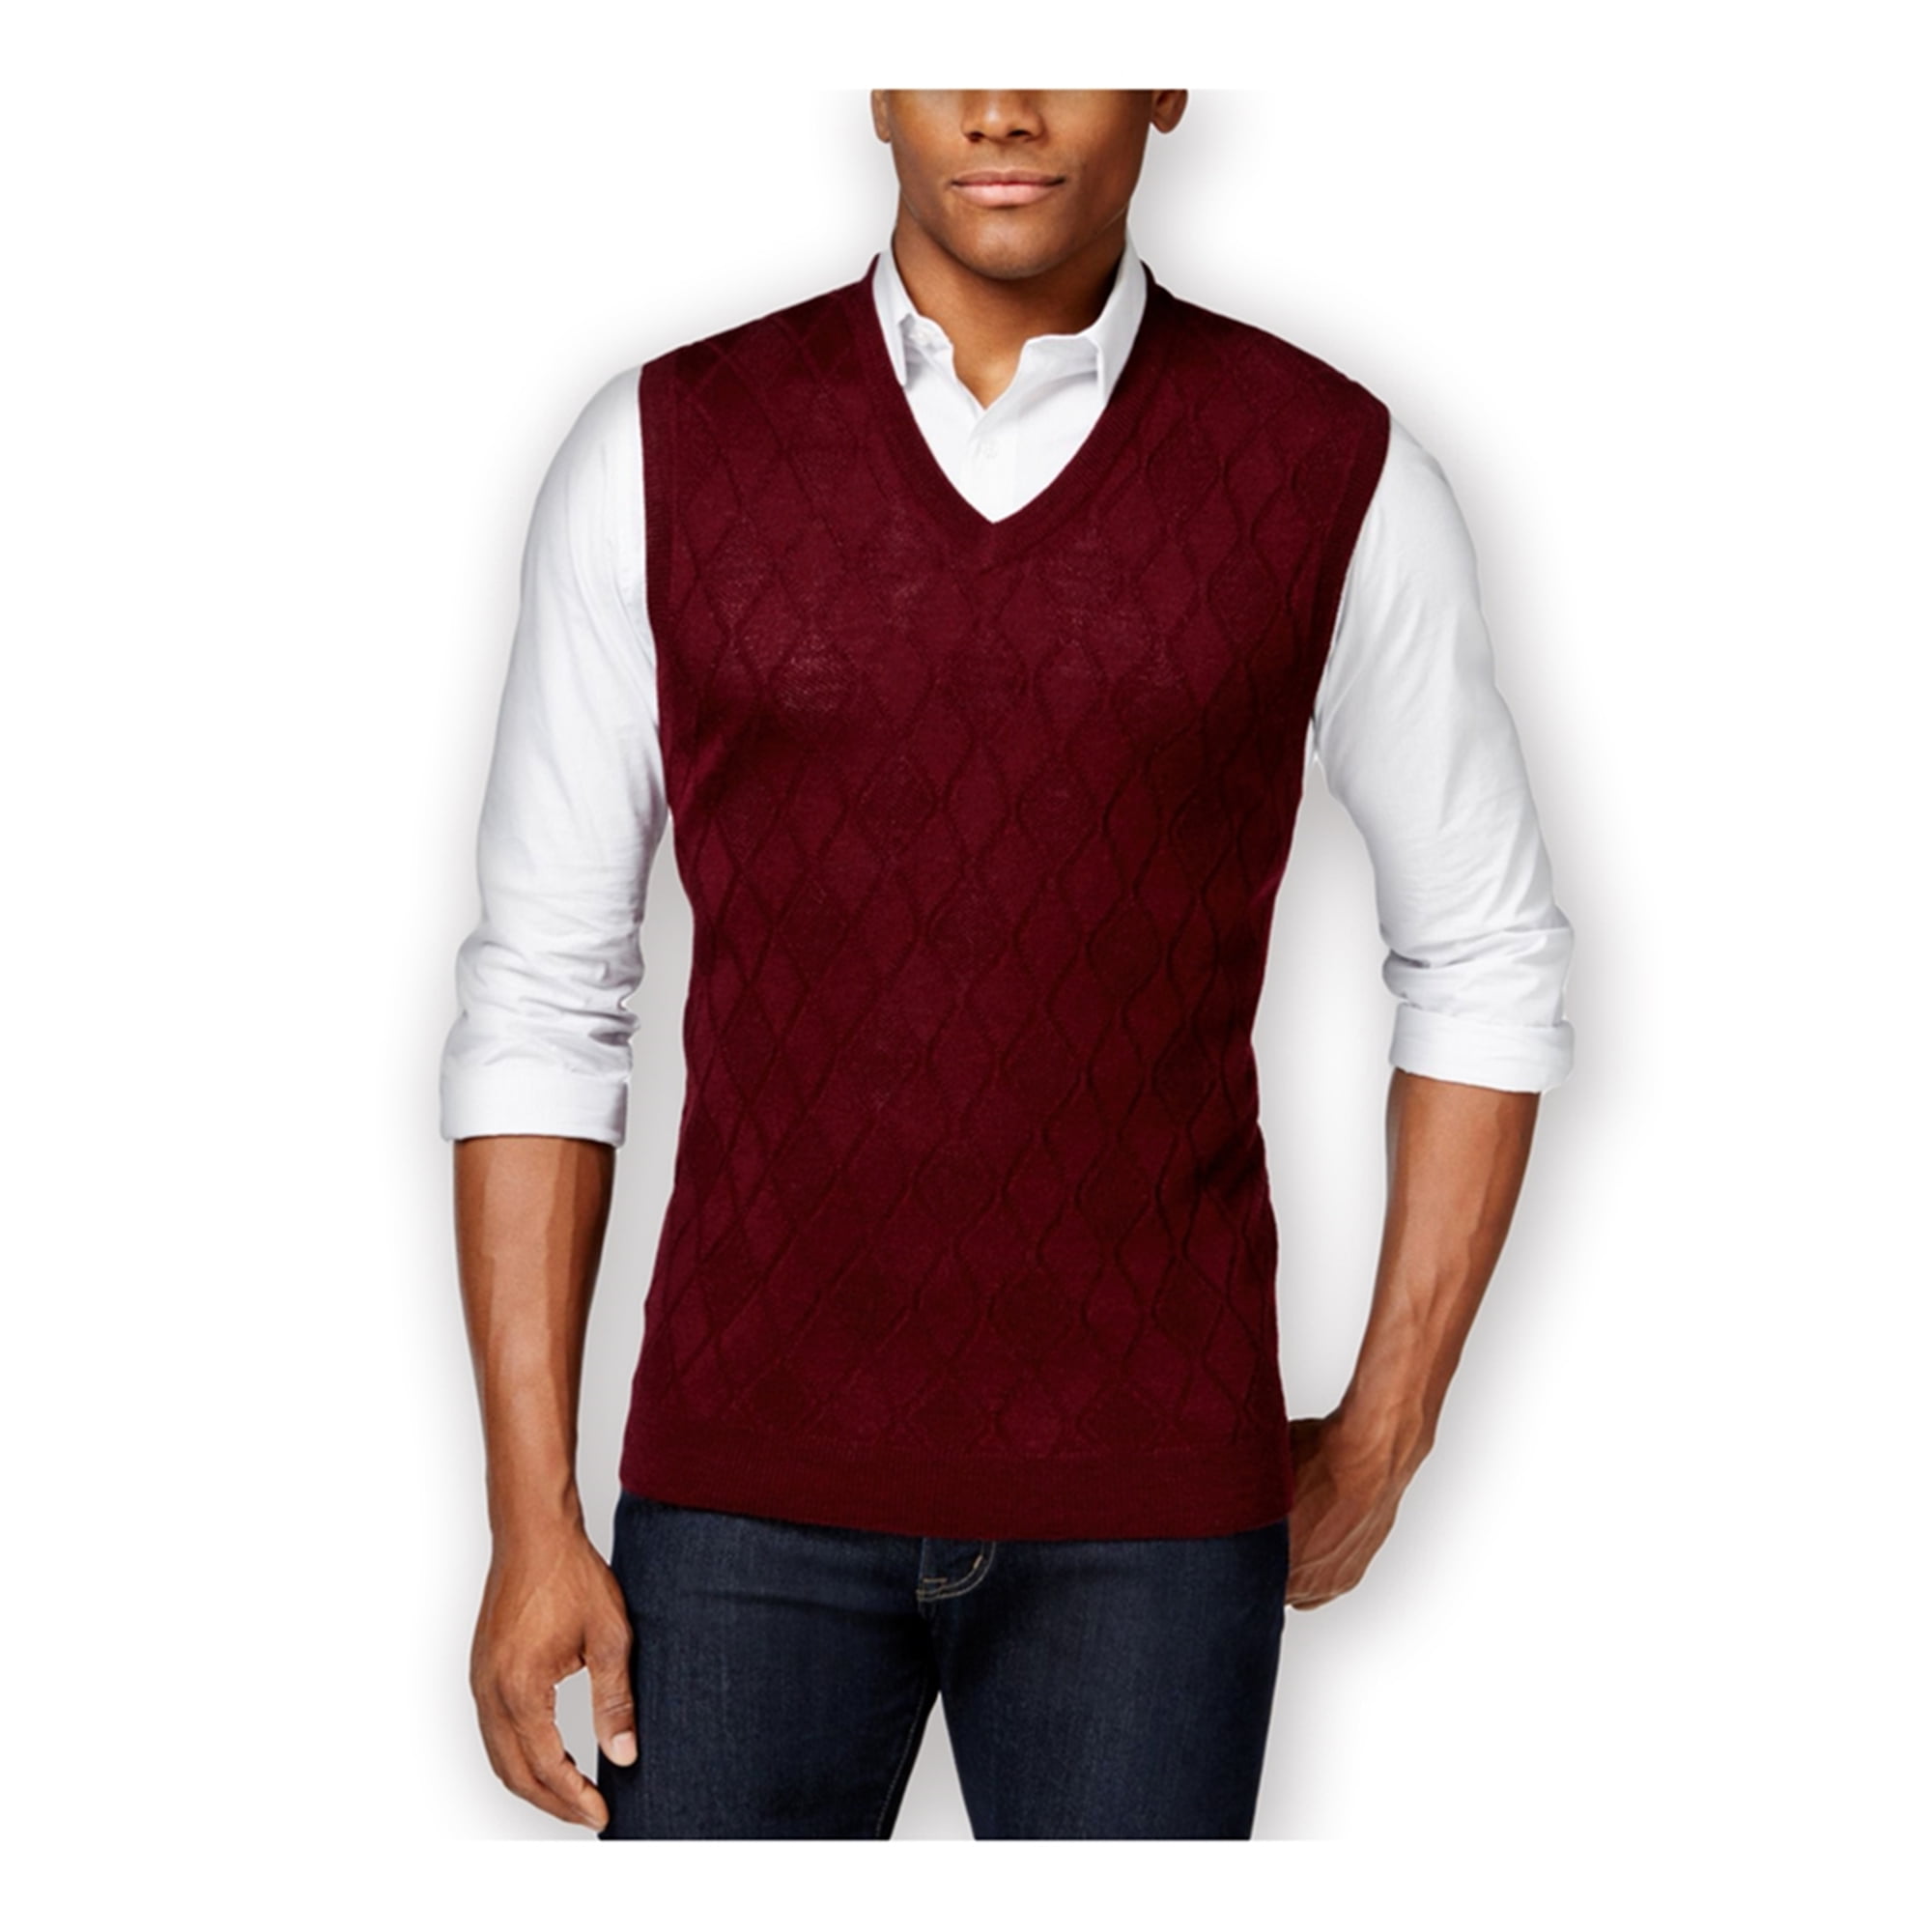 Club Room Mens Merino Textured Argyle Sweater Vest, Red, LT - Walmart.com